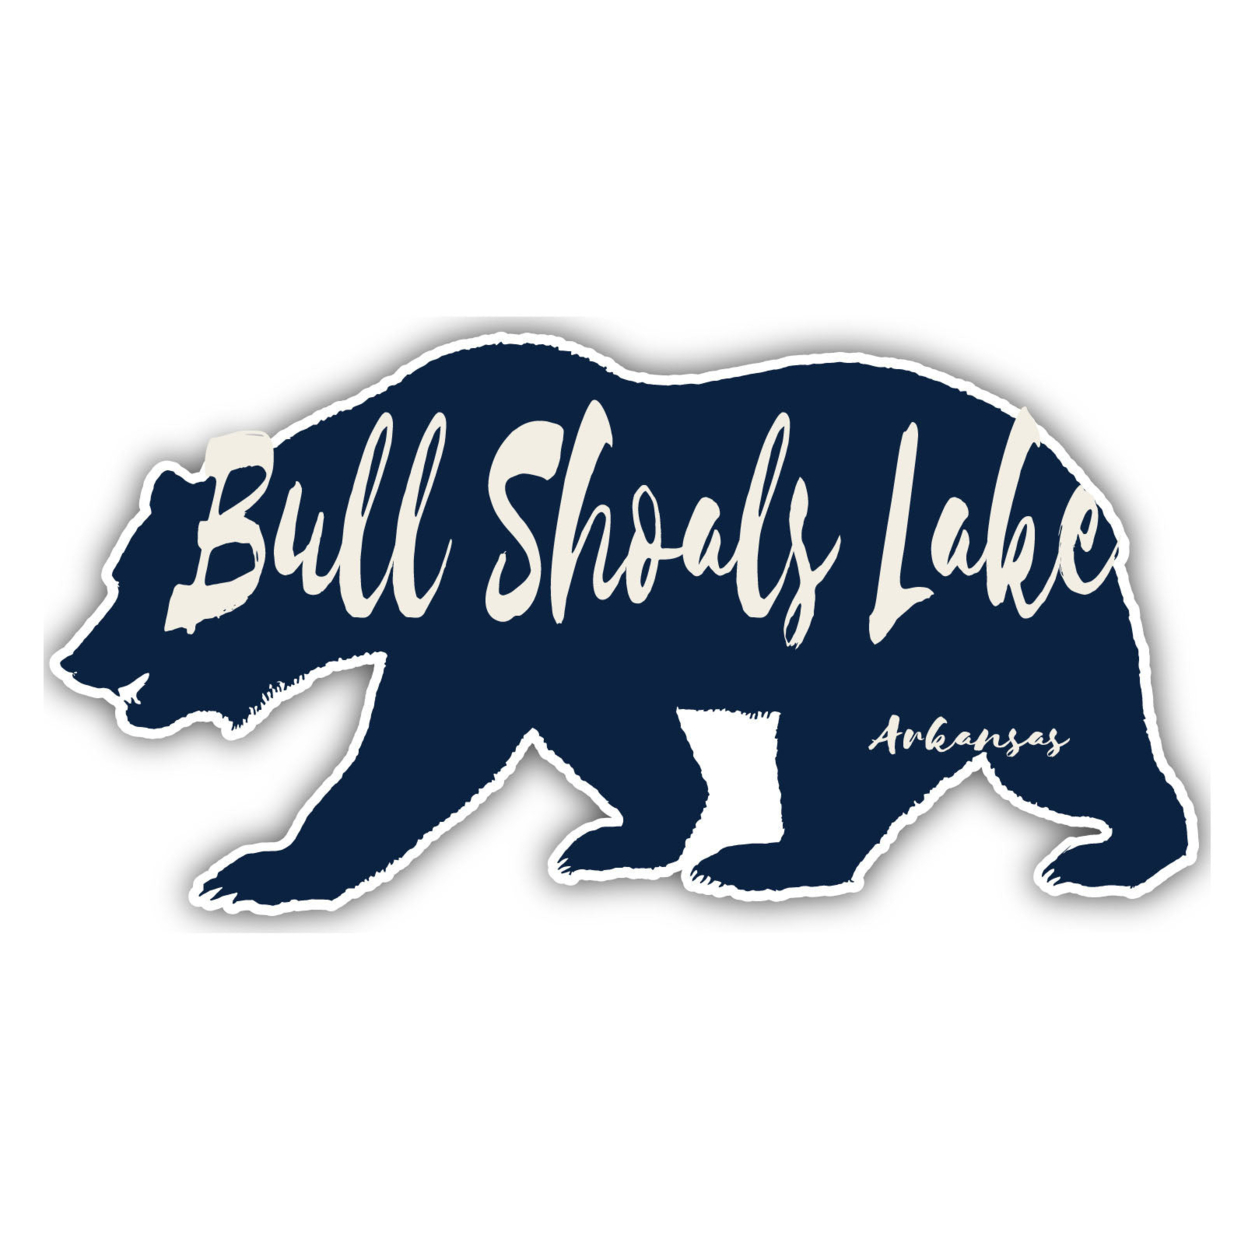 Bull Shoals Lake Arkansas Souvenir Decorative Stickers (Choose Theme And Size) - Single Unit, 12-Inch, Tent